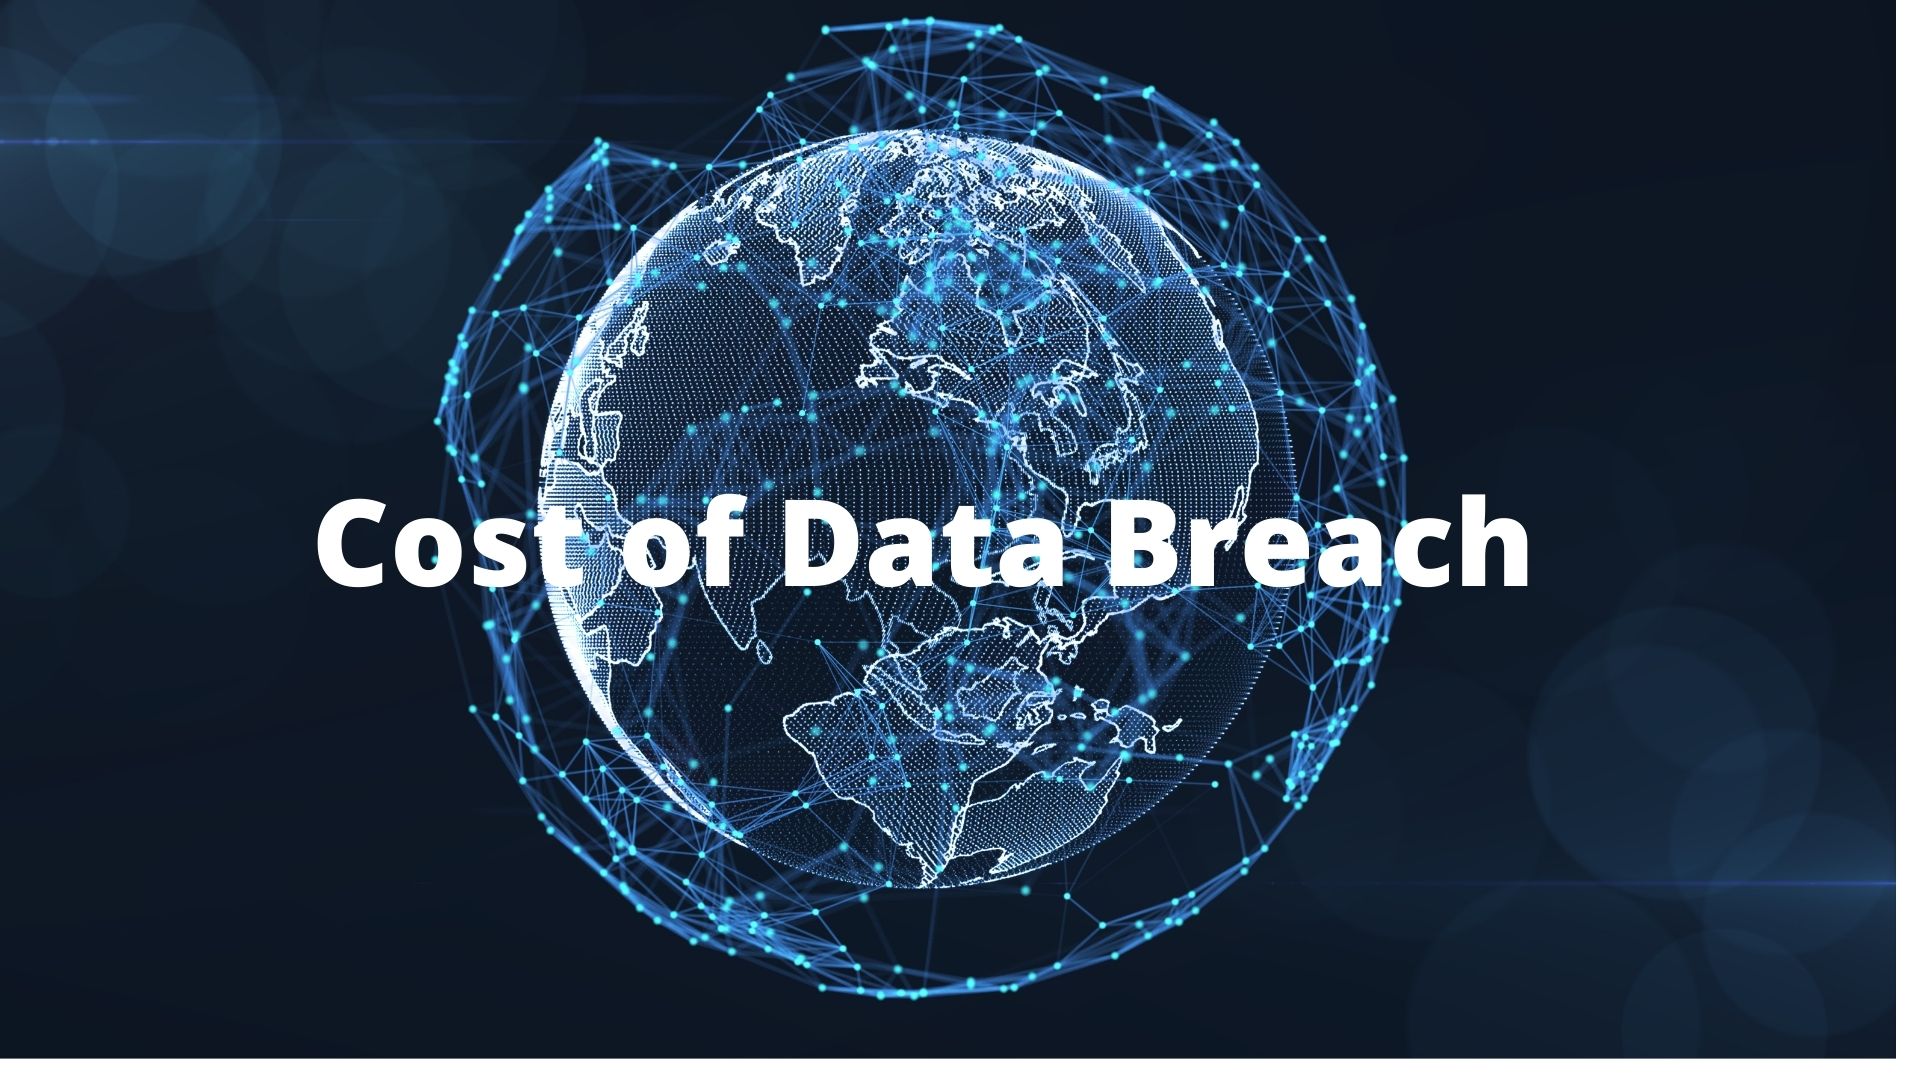 https://www.groundlabs.com/wp-content/uploads/2014/08/Cost-of-Data-Breach.jpg